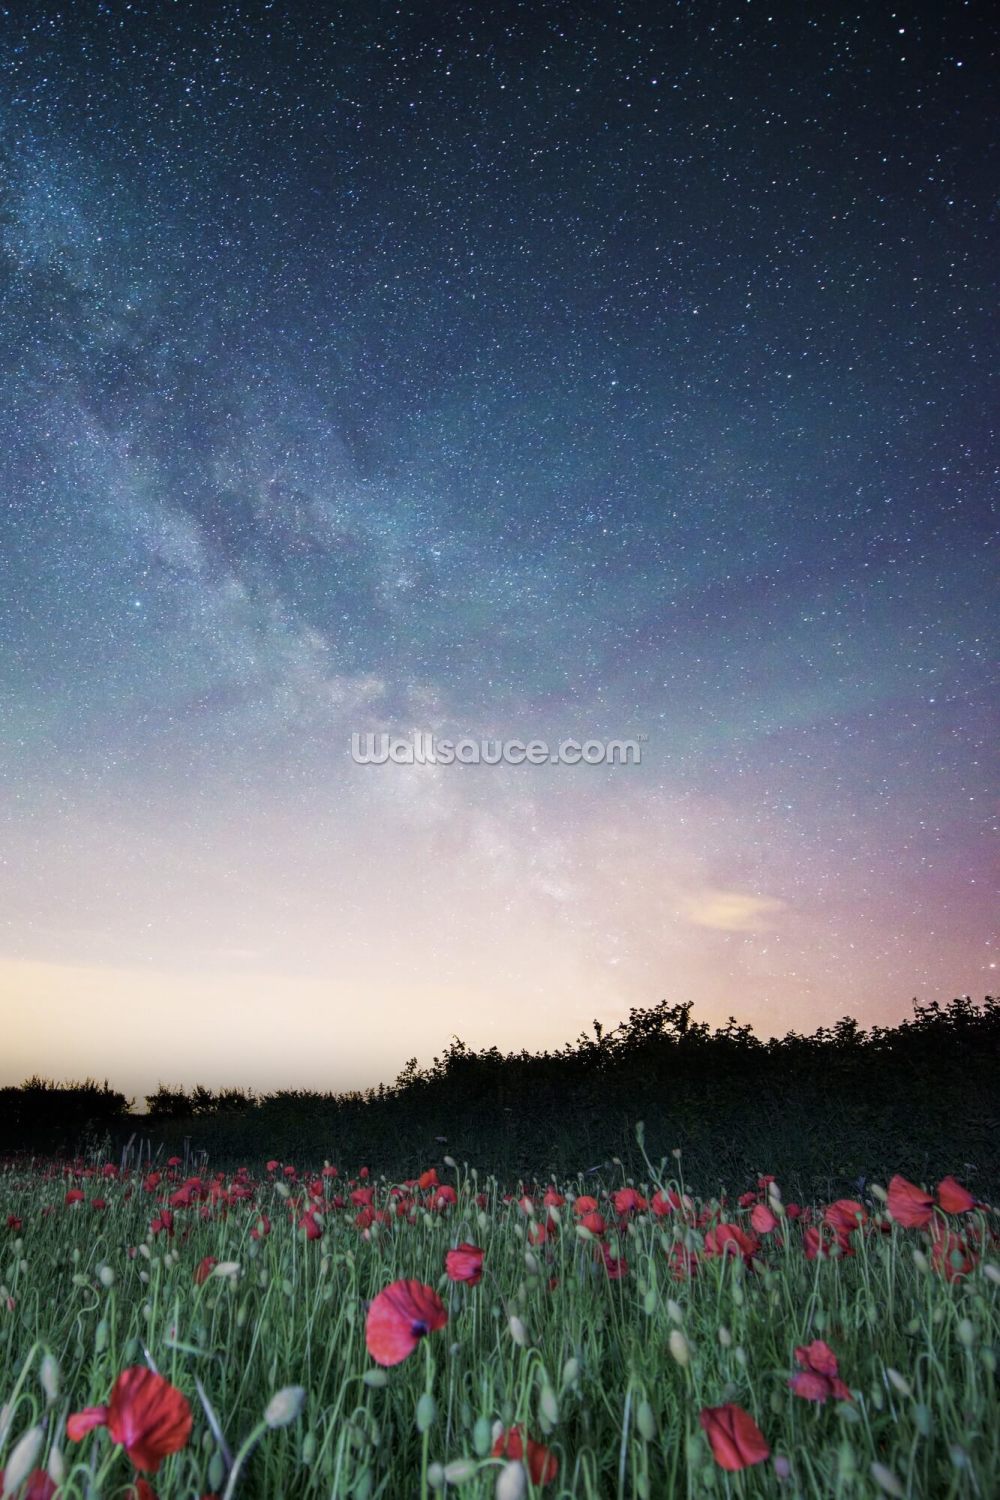 across a field of starlight